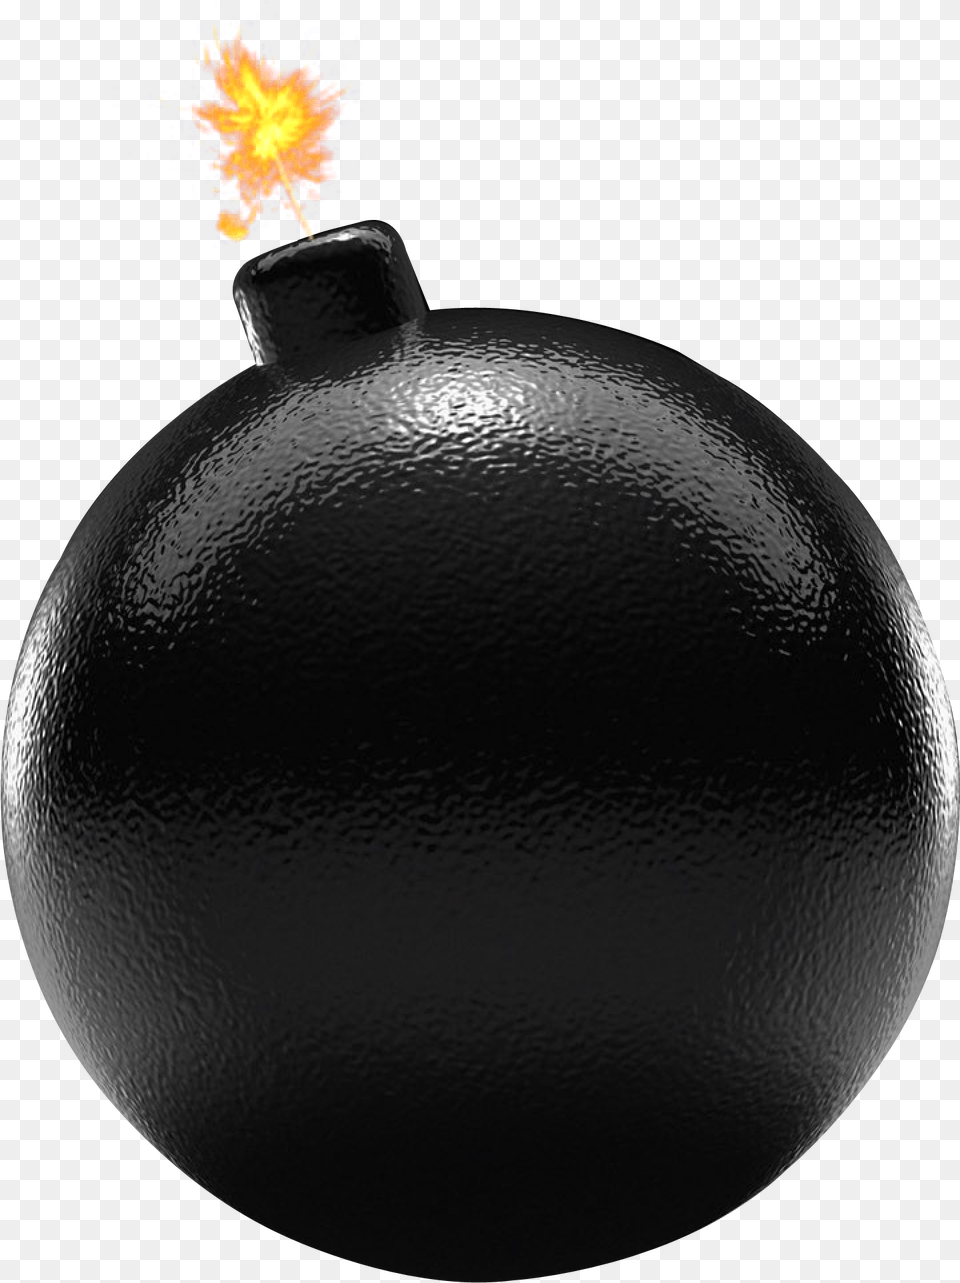 Vase, Ammunition, Bomb, Weapon, Astronomy Png Image